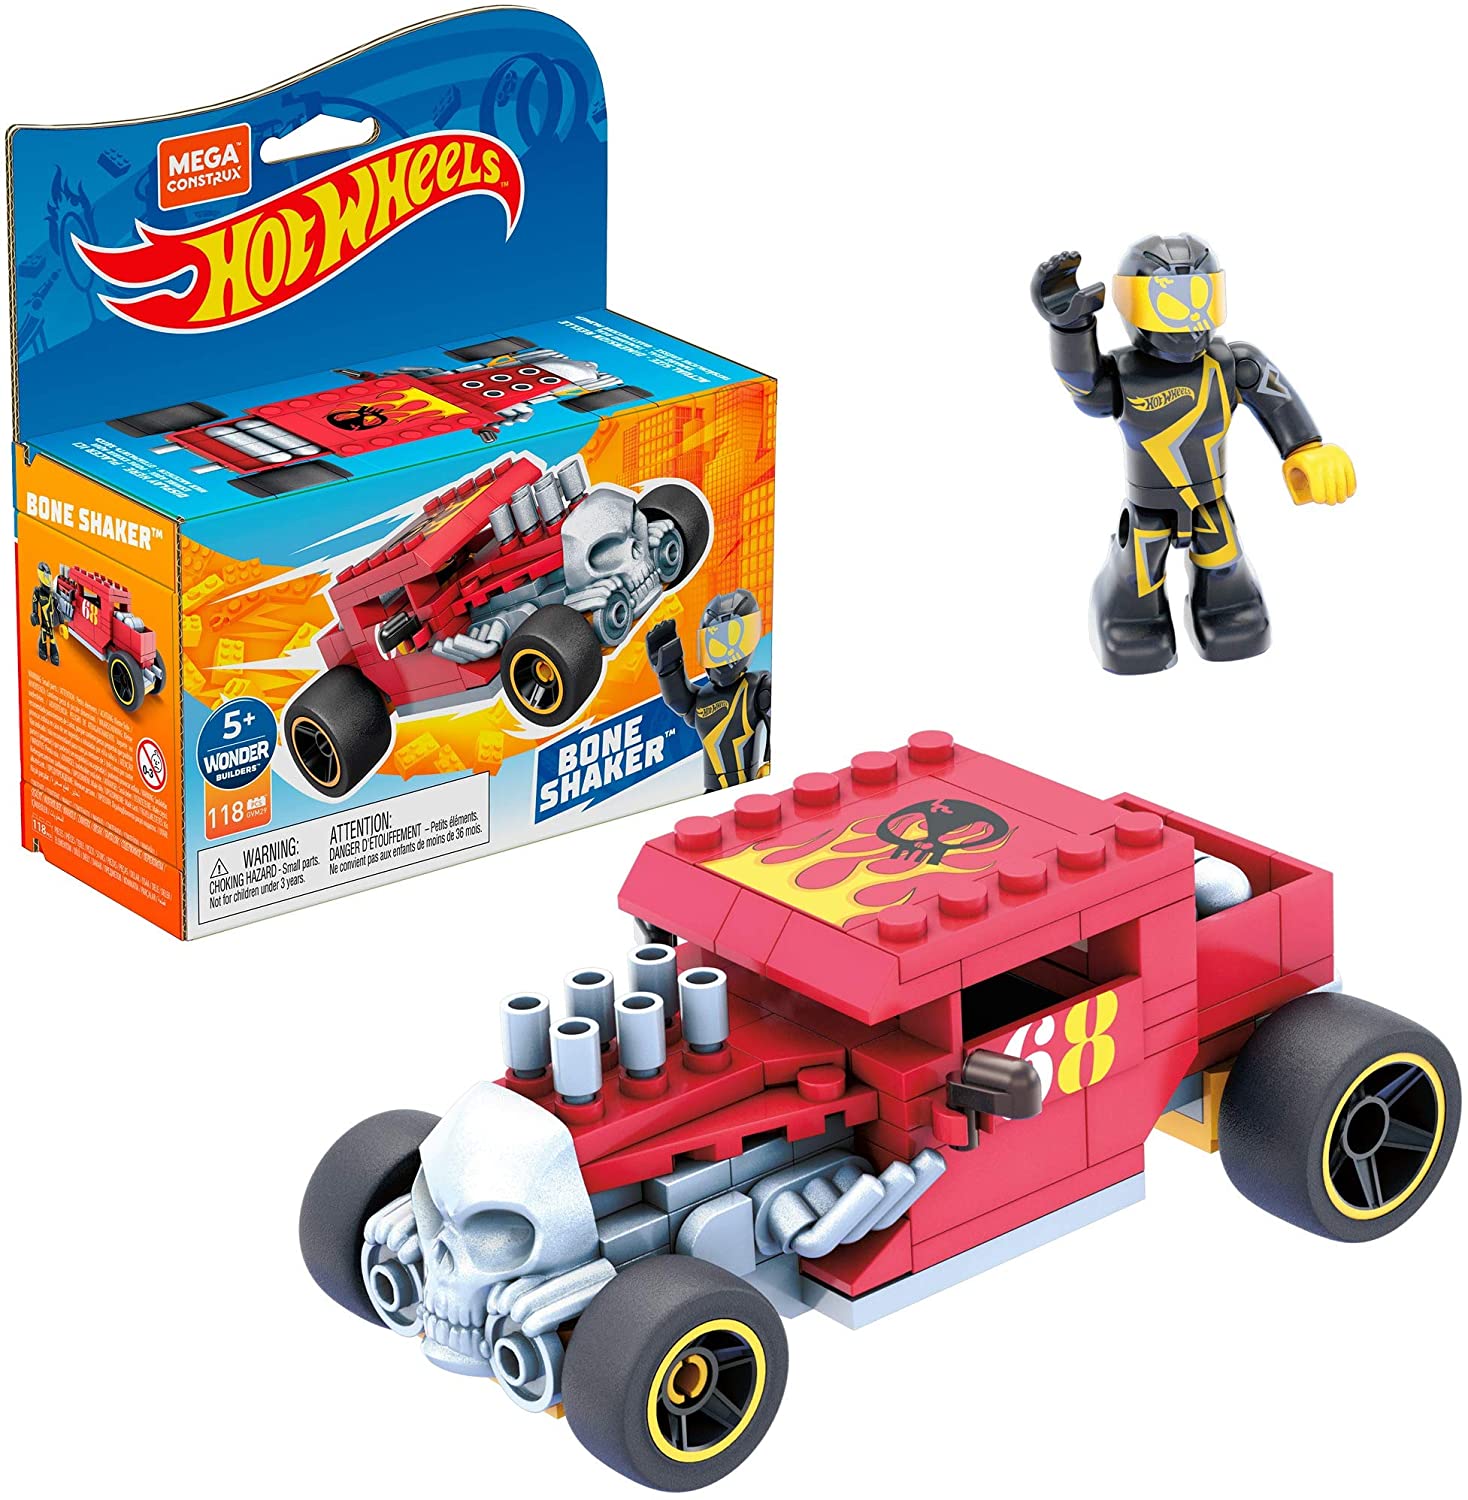 Mega Hot Wheels Bone Shaker Construction Set, Building Toys for